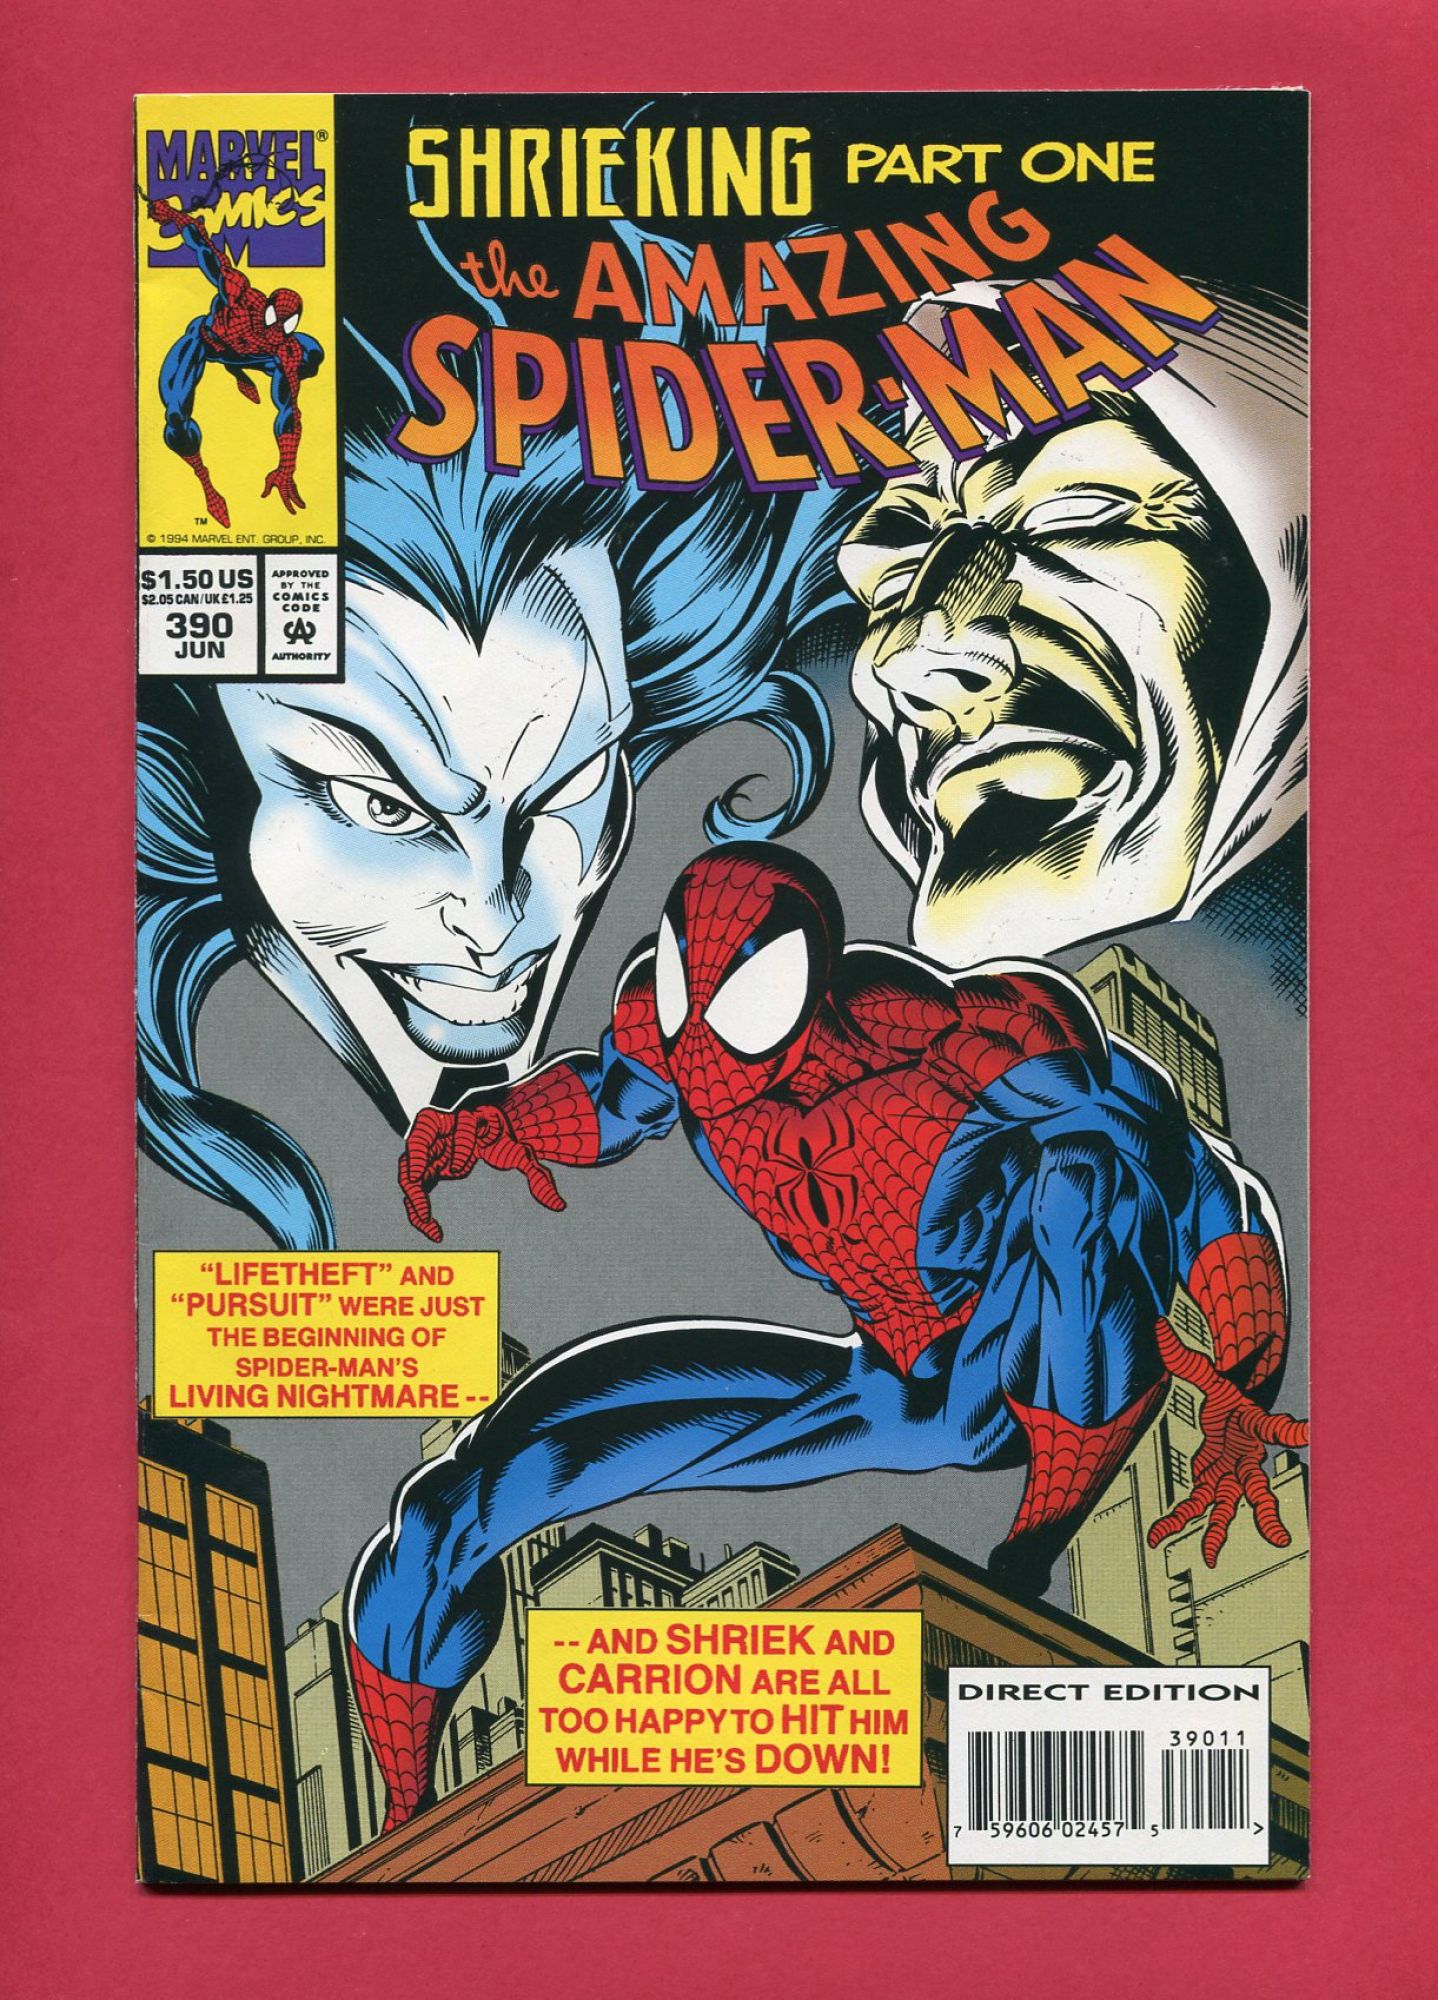 Amazing Spider-Man #390, Jun 1994, 8.5 VF+